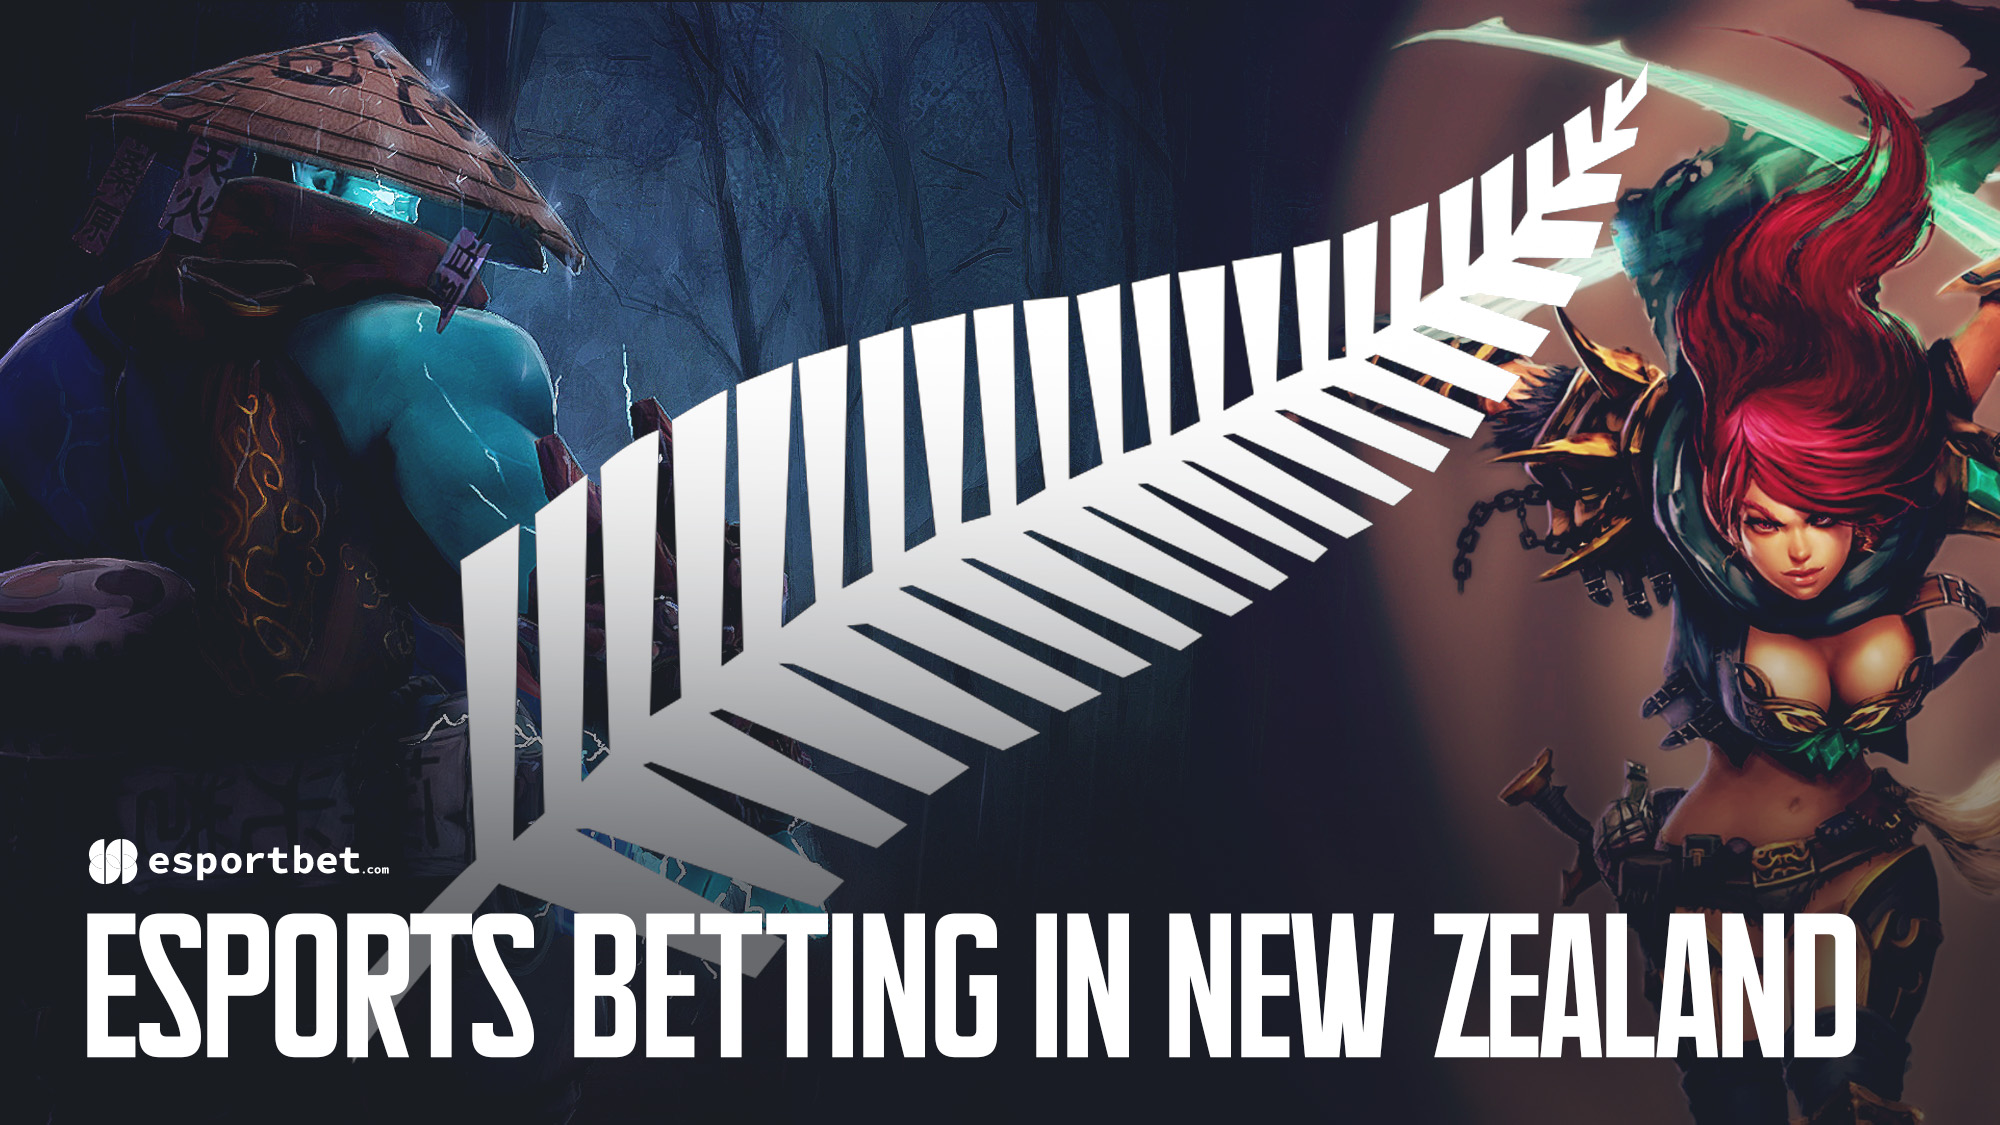 eSports Betting New Zealand